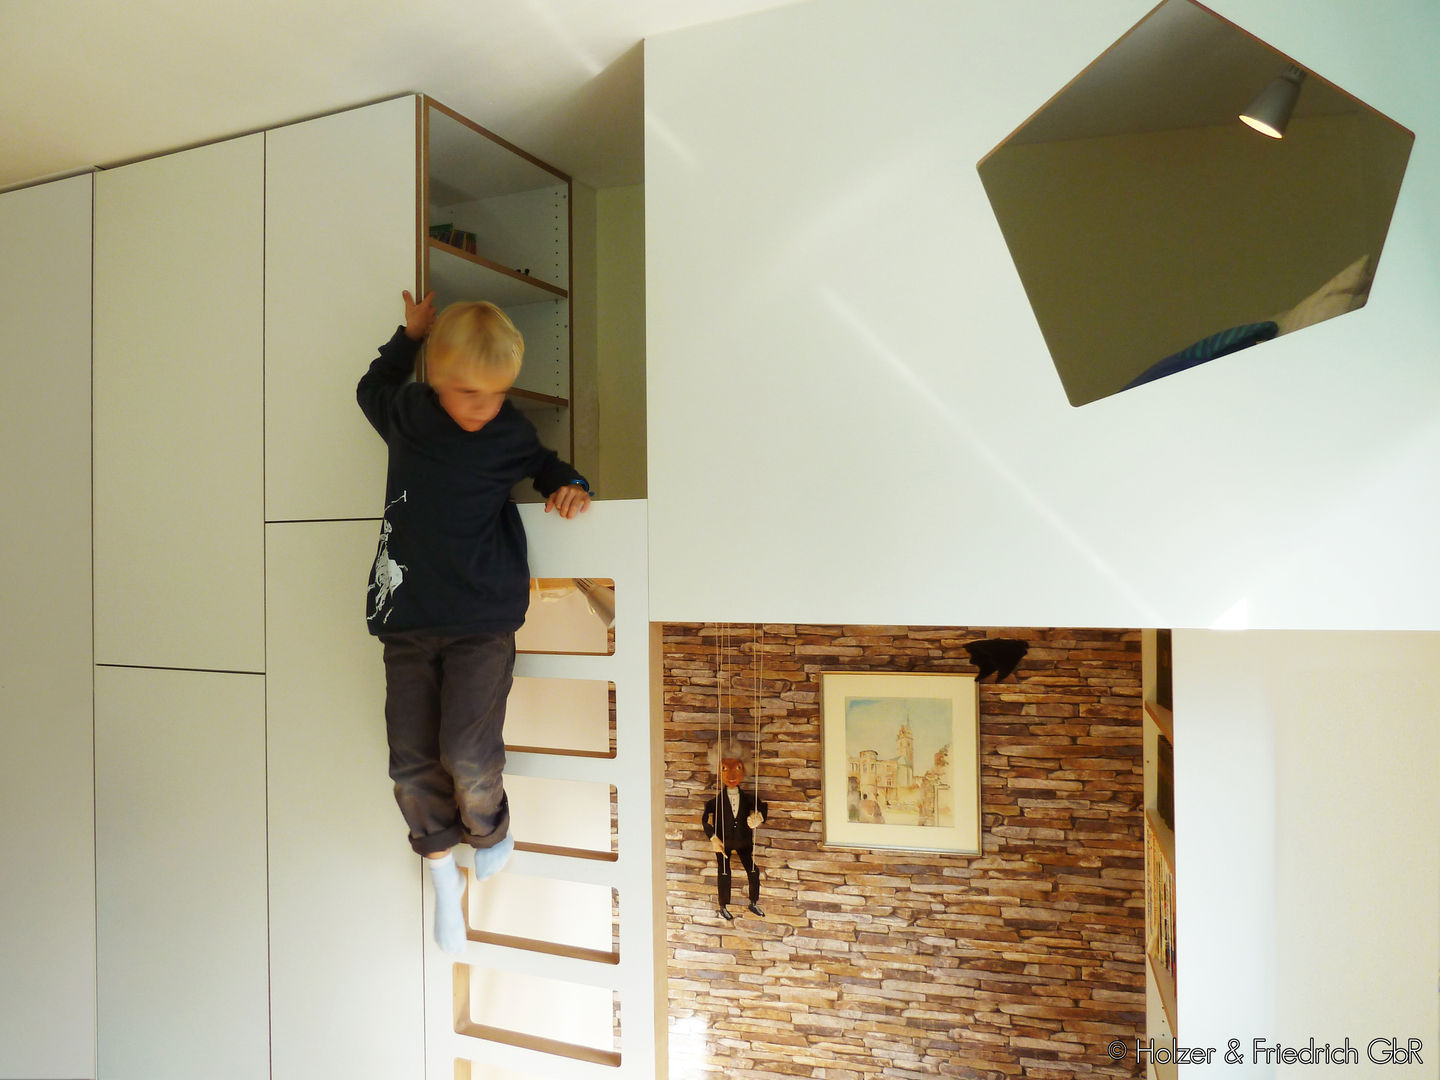 Jonas' Kinderzimmer, Holzer & Friedrich GbR Holzer & Friedrich GbR Dormitorios infantiles de estilo moderno